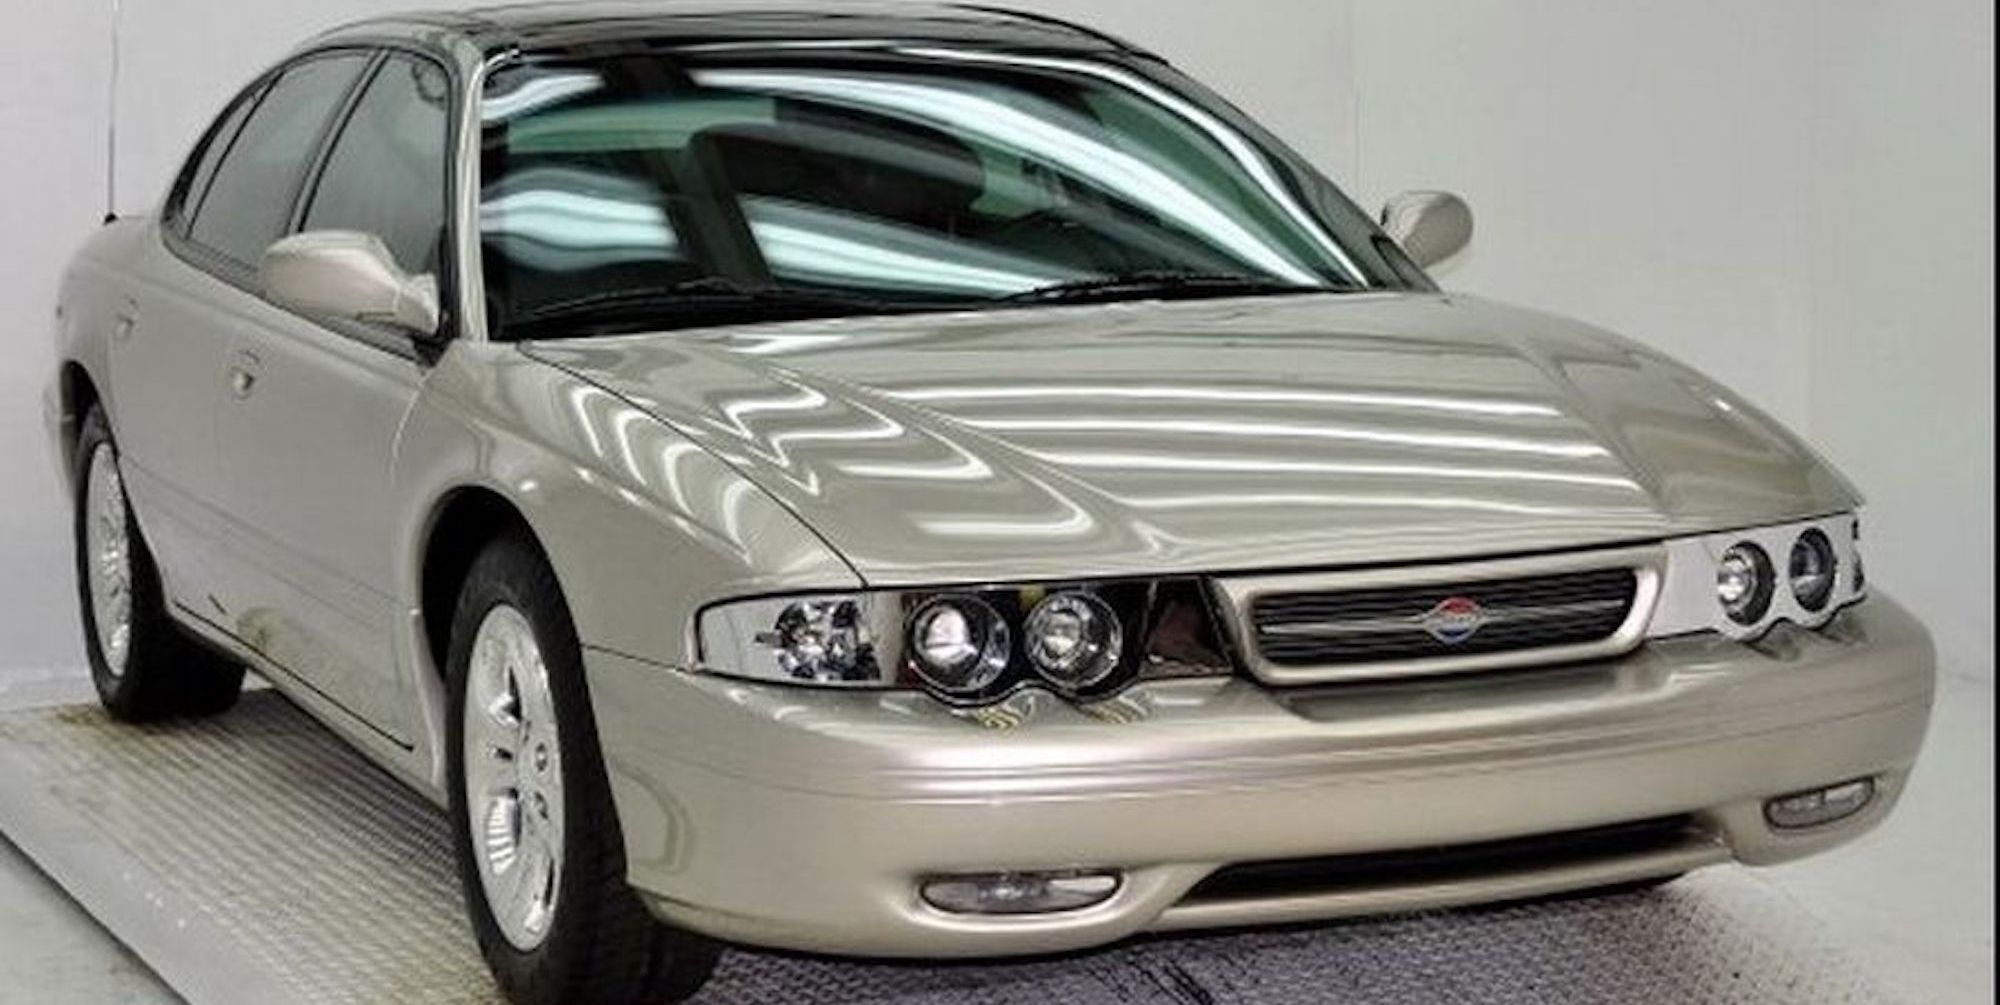 Forgotten 1993 Chrysler 300 Concept Comes Up for Sale